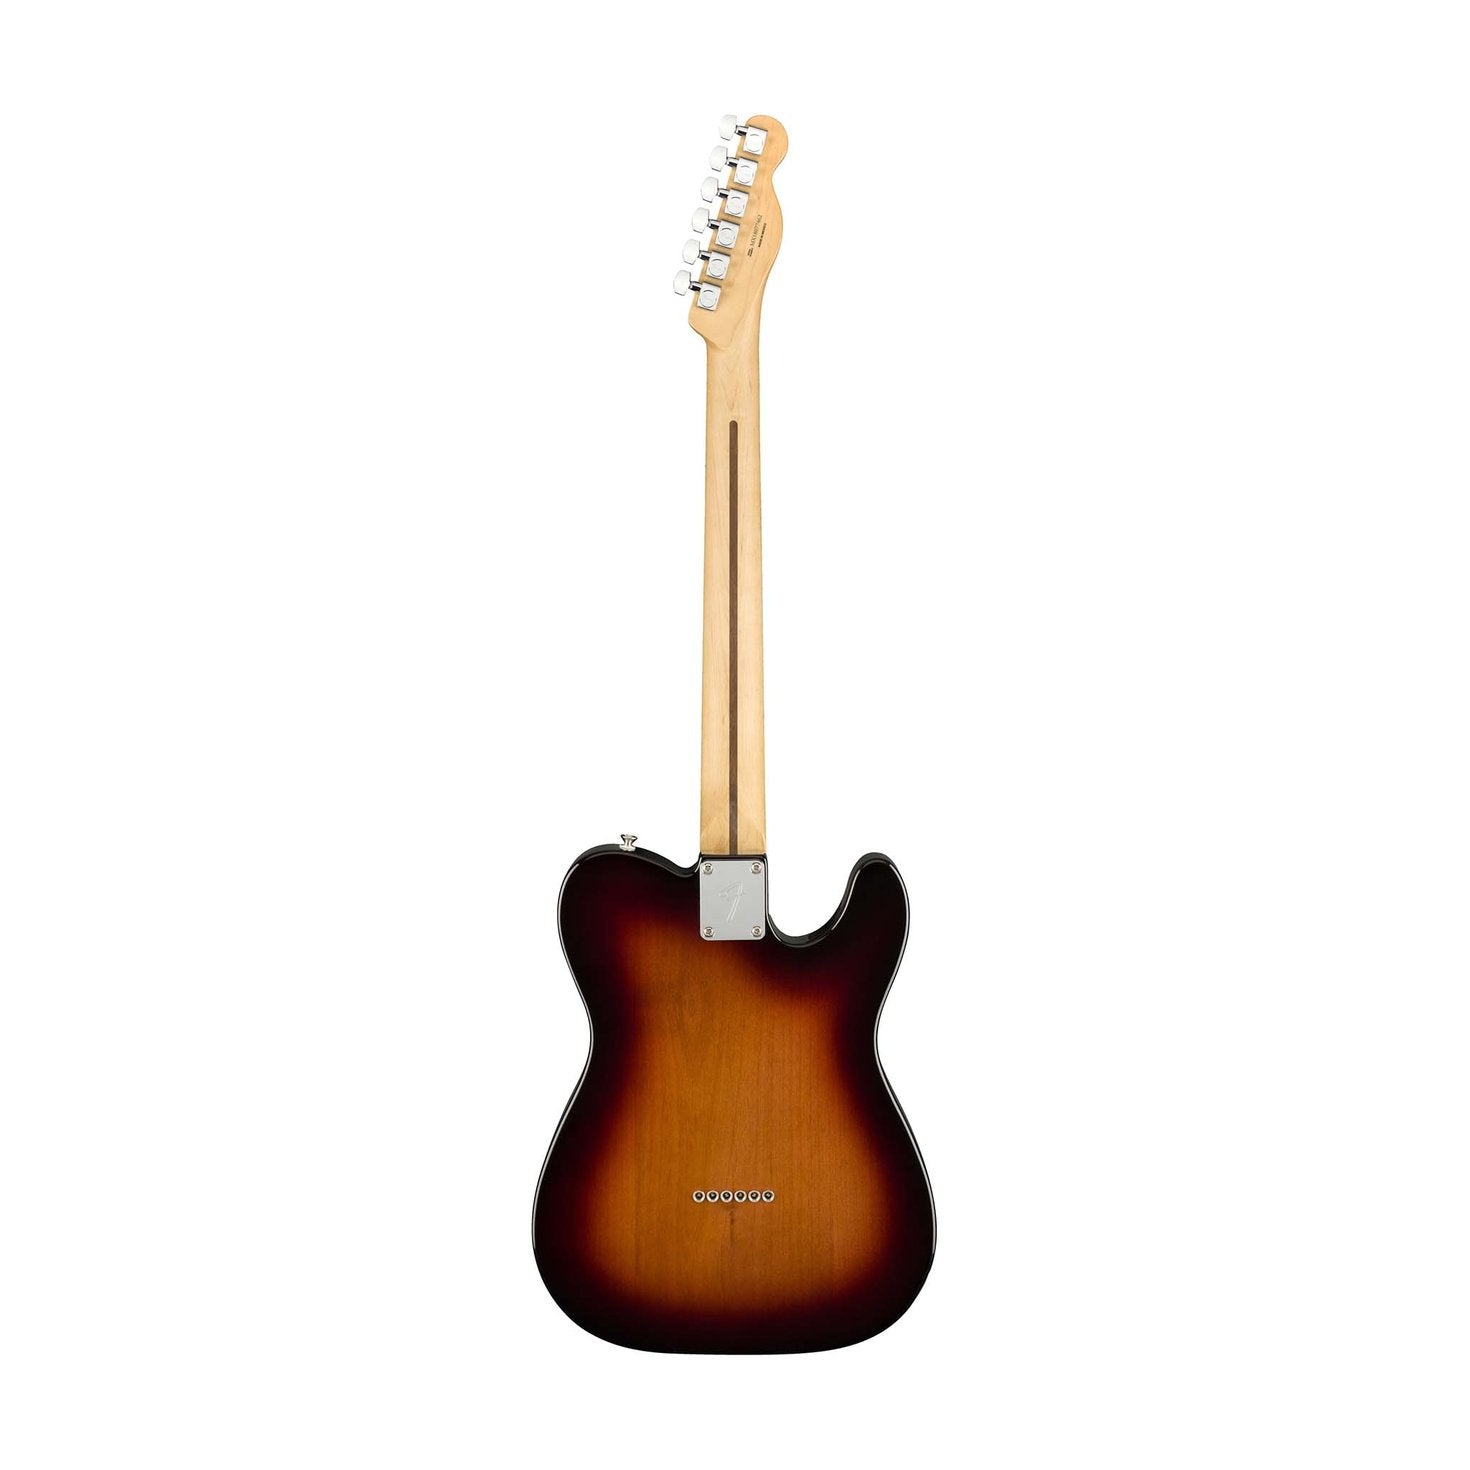 Fender Player Telecaster Left-Handed Electric Guitar, Maple FB, 3-Tone Sunburst, FENDER, ELECTRIC GUITAR, fender-eletric-guitar-f03-014-5222-500, ZOSO MUSIC SDN BHD